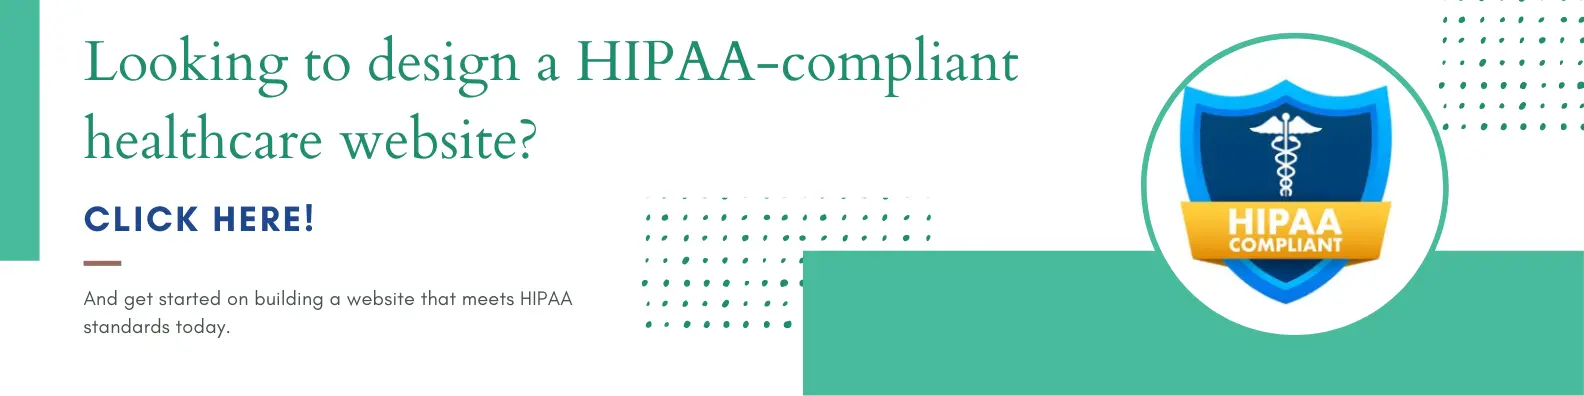 design a HIPAA-compliant healthcare website